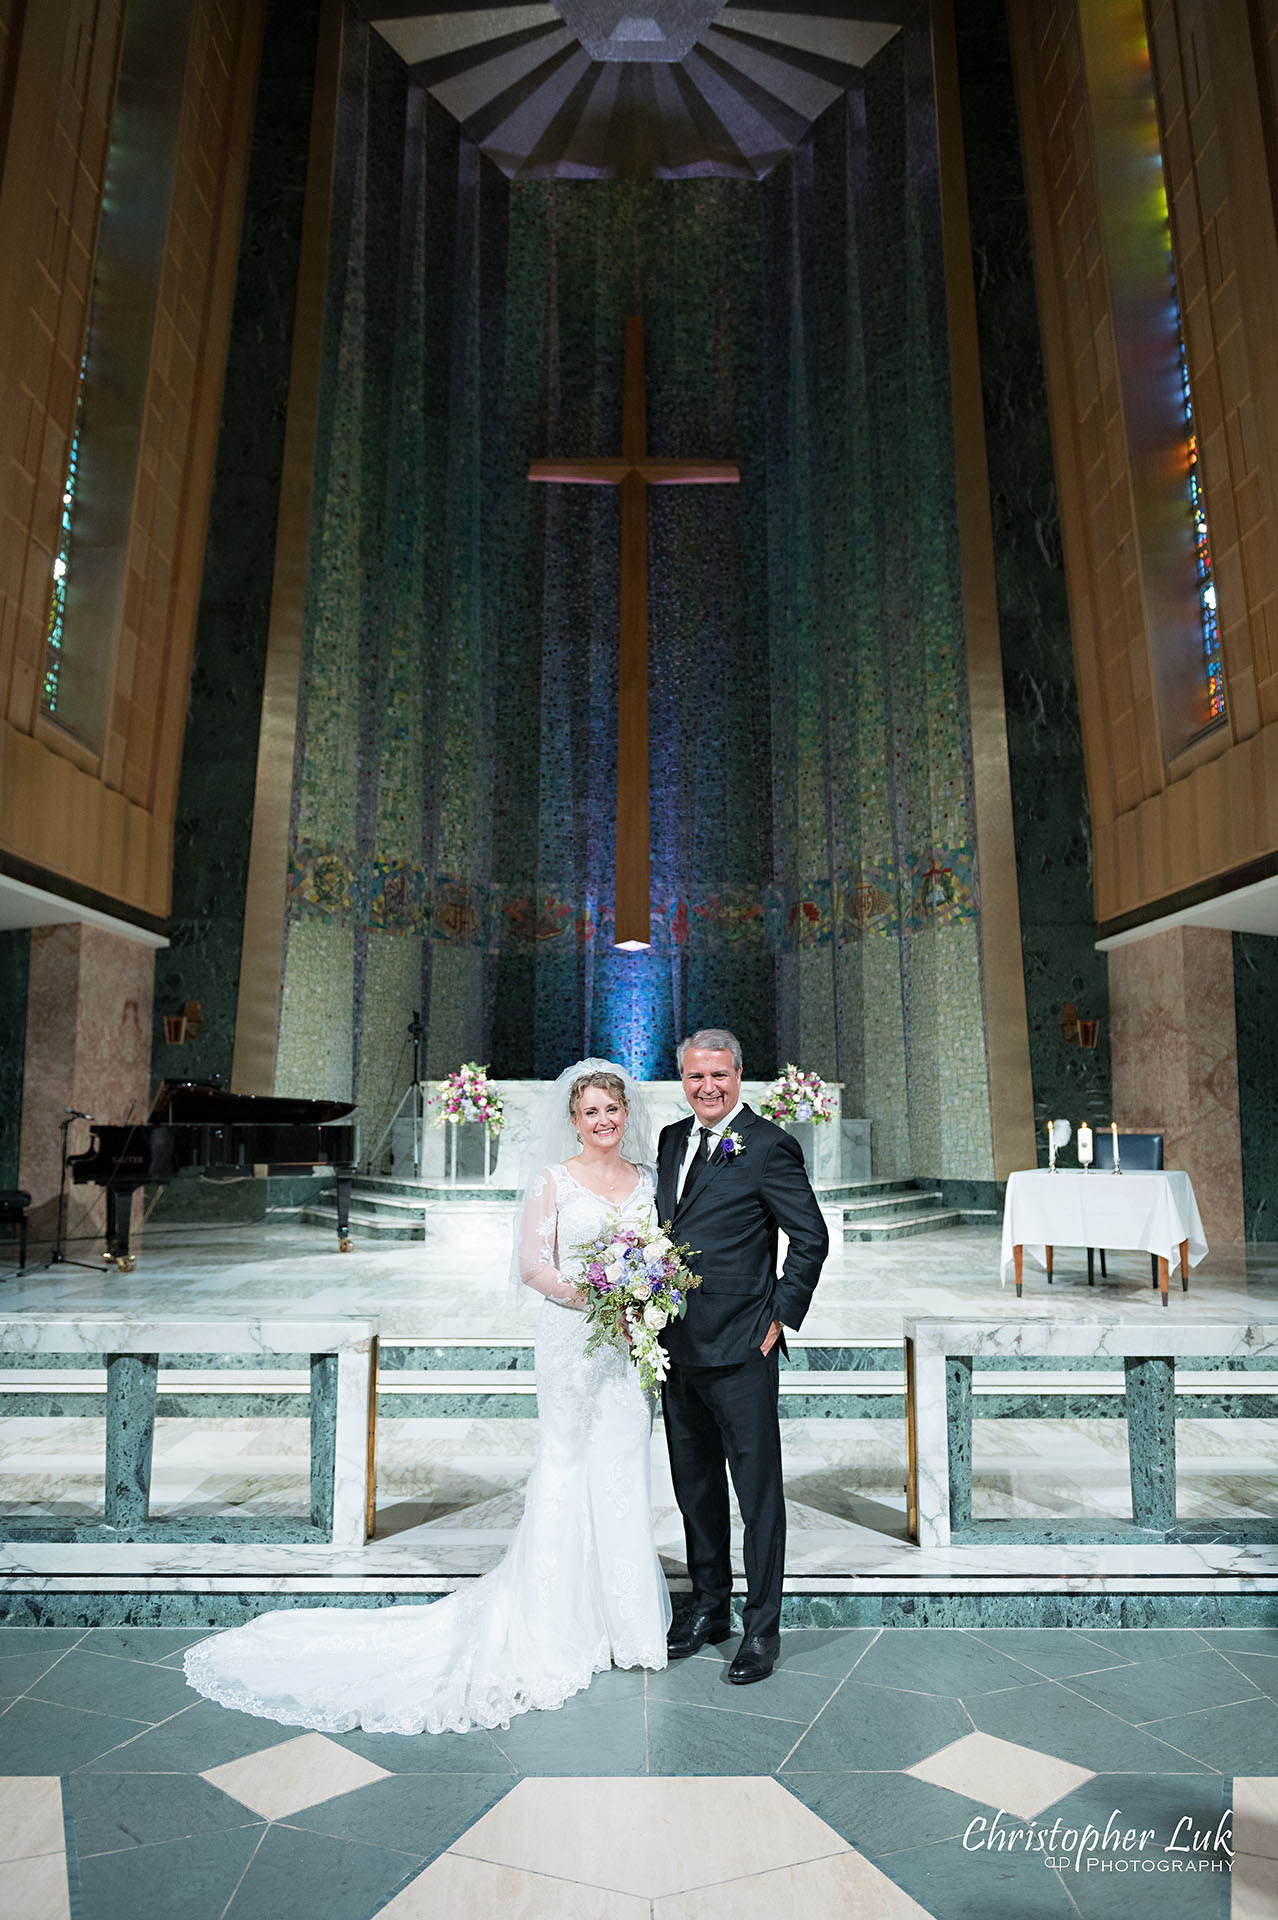 Christopher Luk Toronto Wedding Photographer Natural Candid Photojournalistic Tyndale Chapel Church Ceremony Bride Groom Altar Cross Portrait 